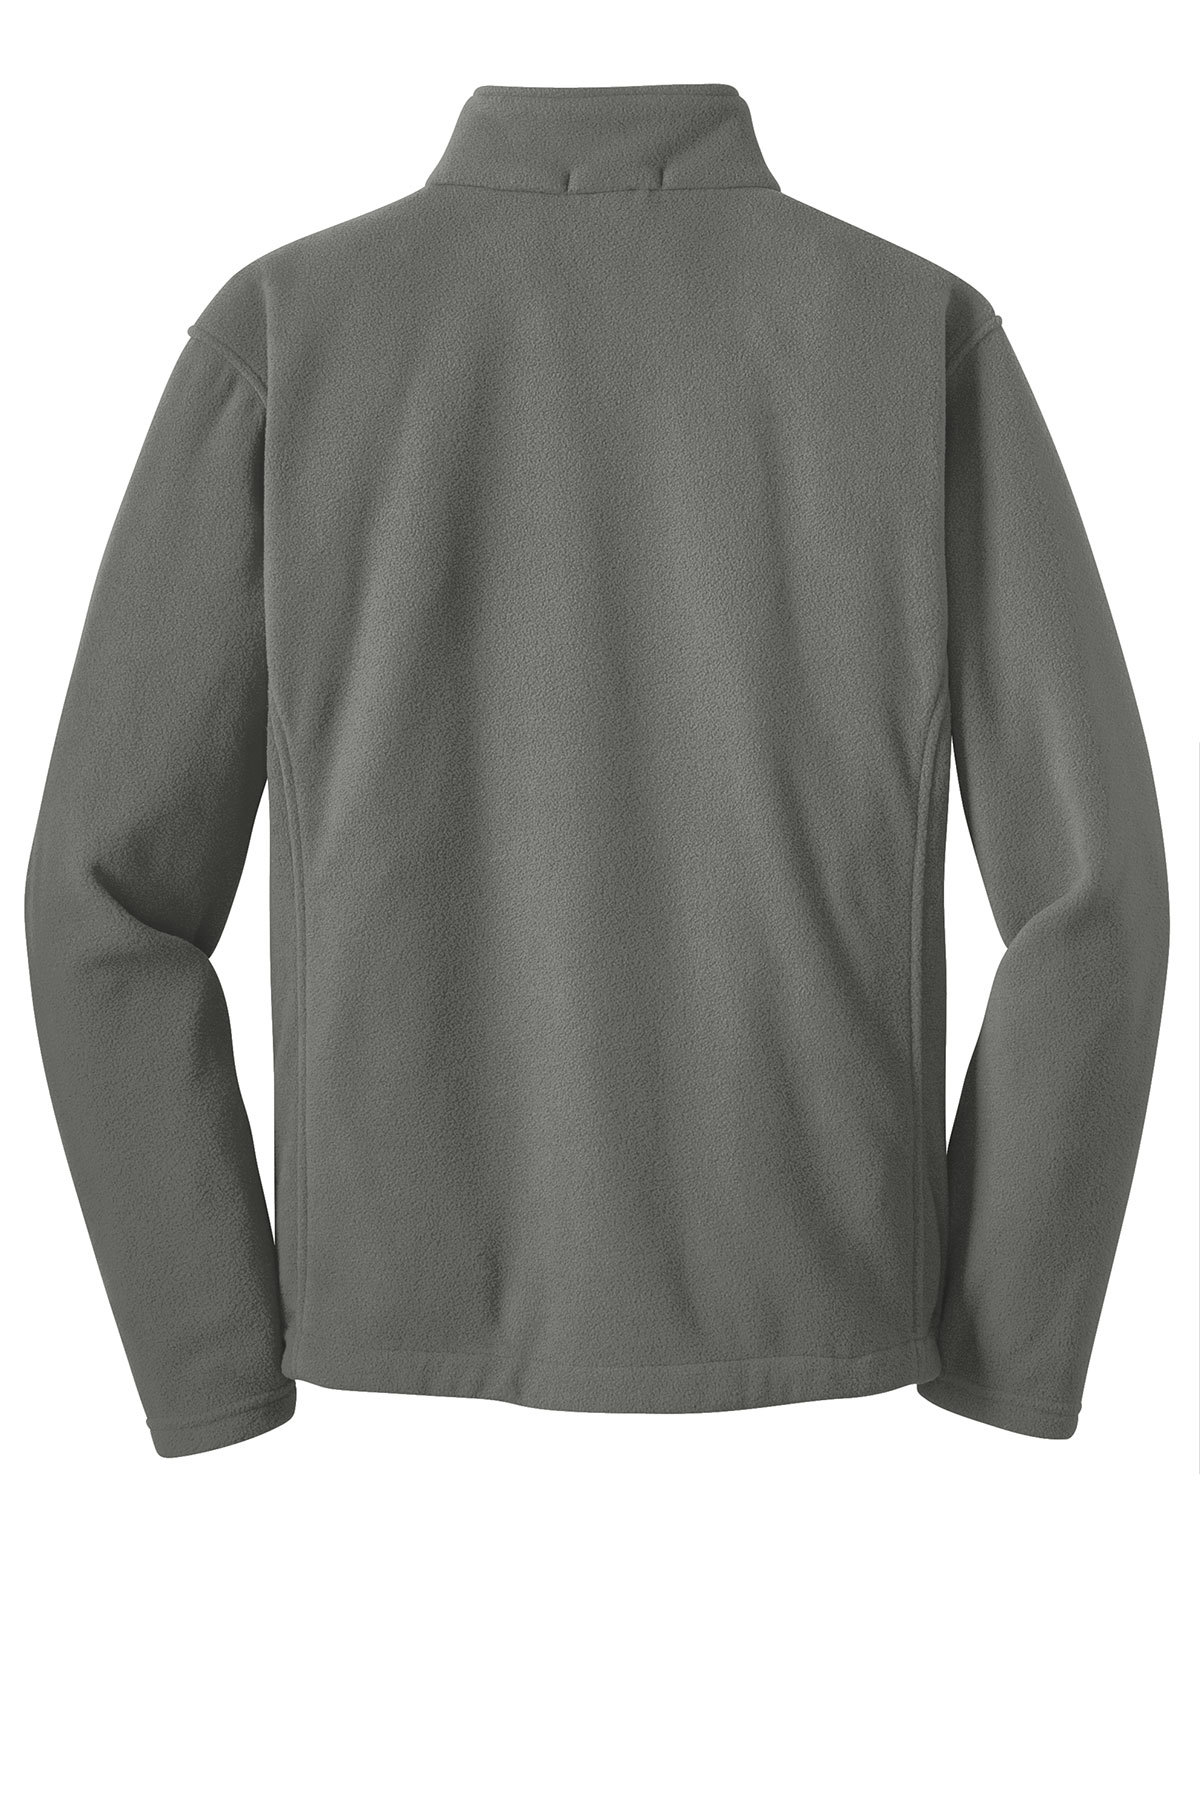 Smoothie King - Port Authority® Value Fleece Jacket